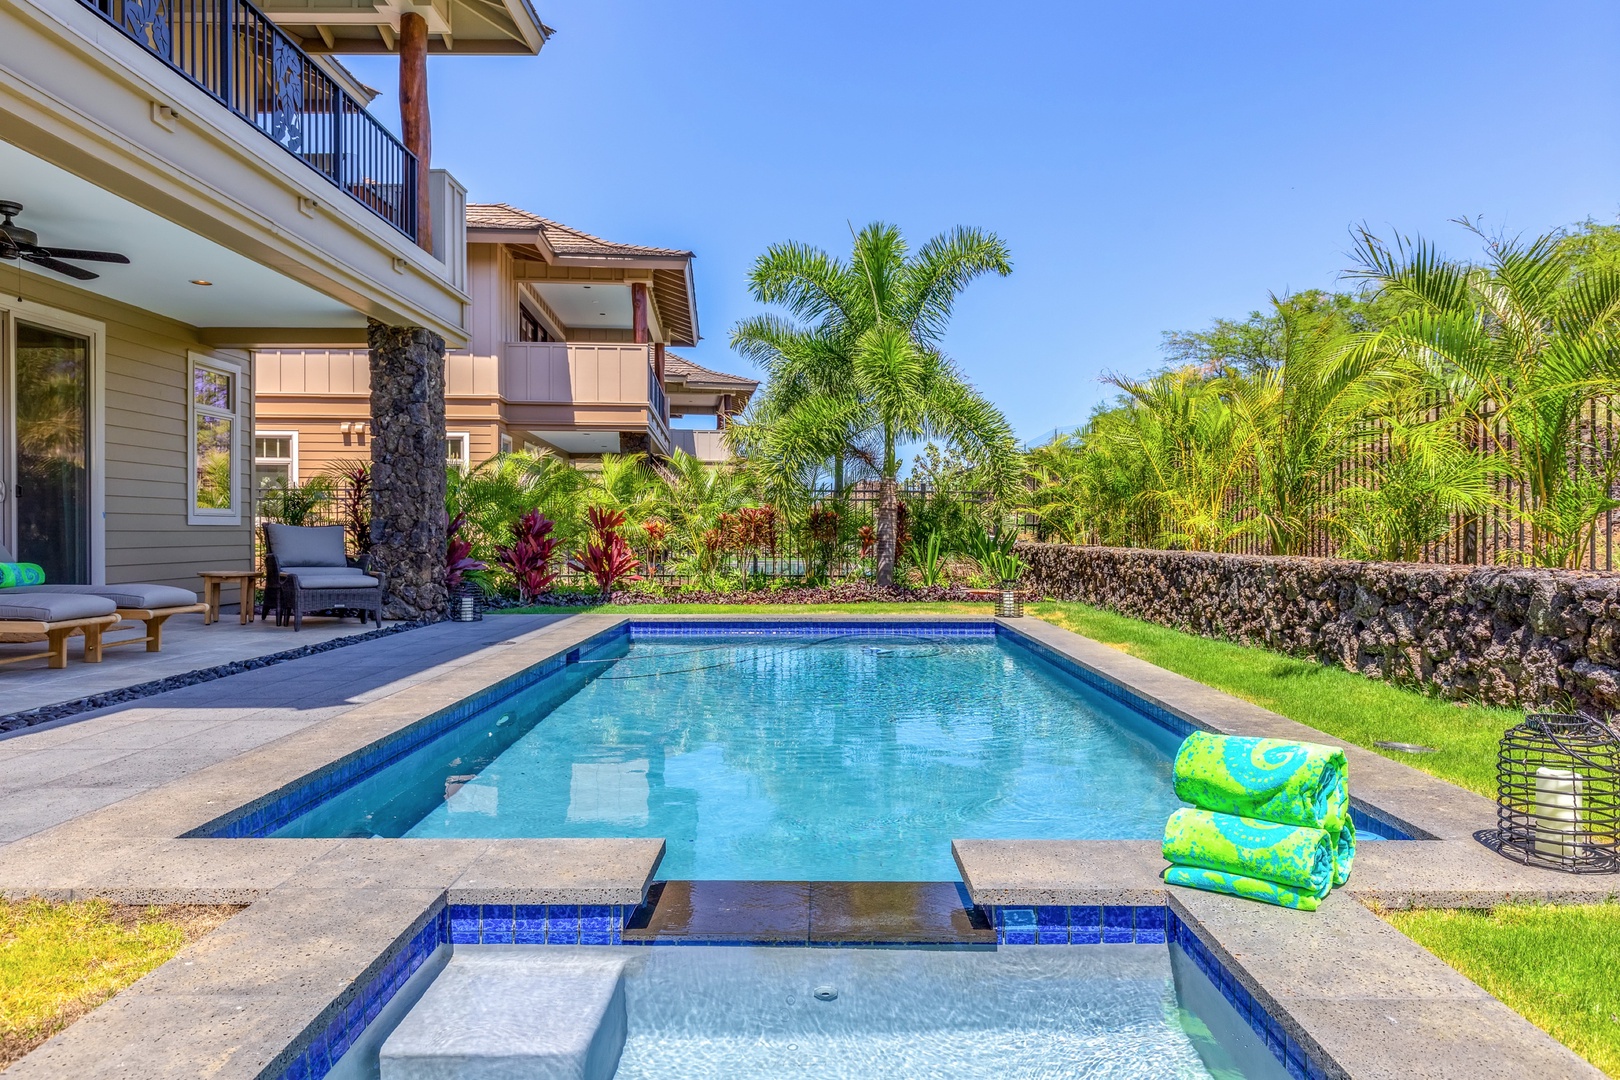 Kamuela Vacation Rentals, 3BD KaMilo (349) Home at Mauna Lani Resort - Alternate view of pool and jacuzzi.